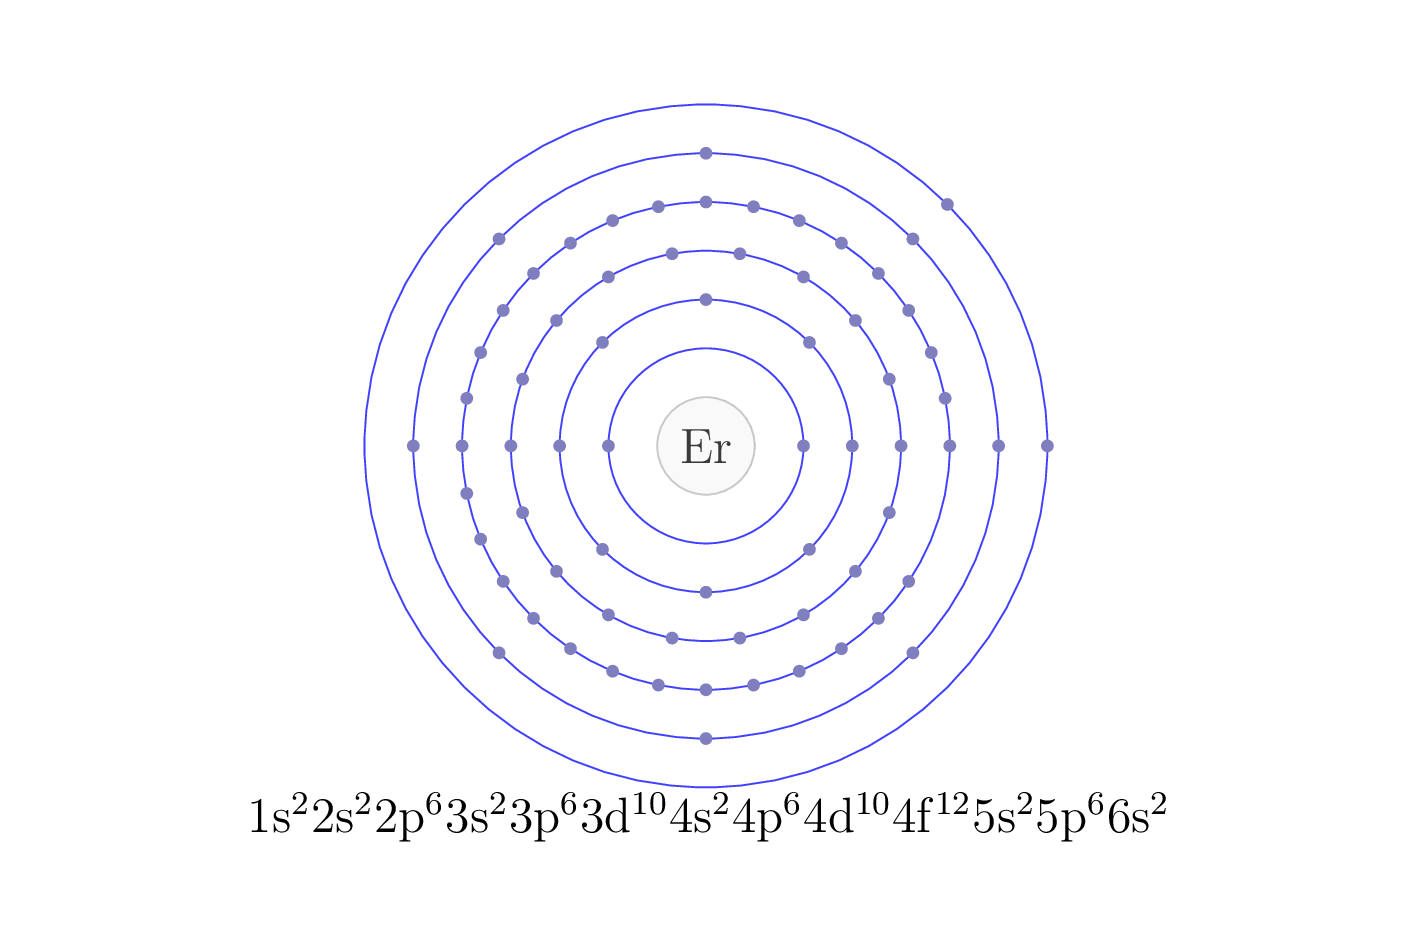 electron configuration of element Er